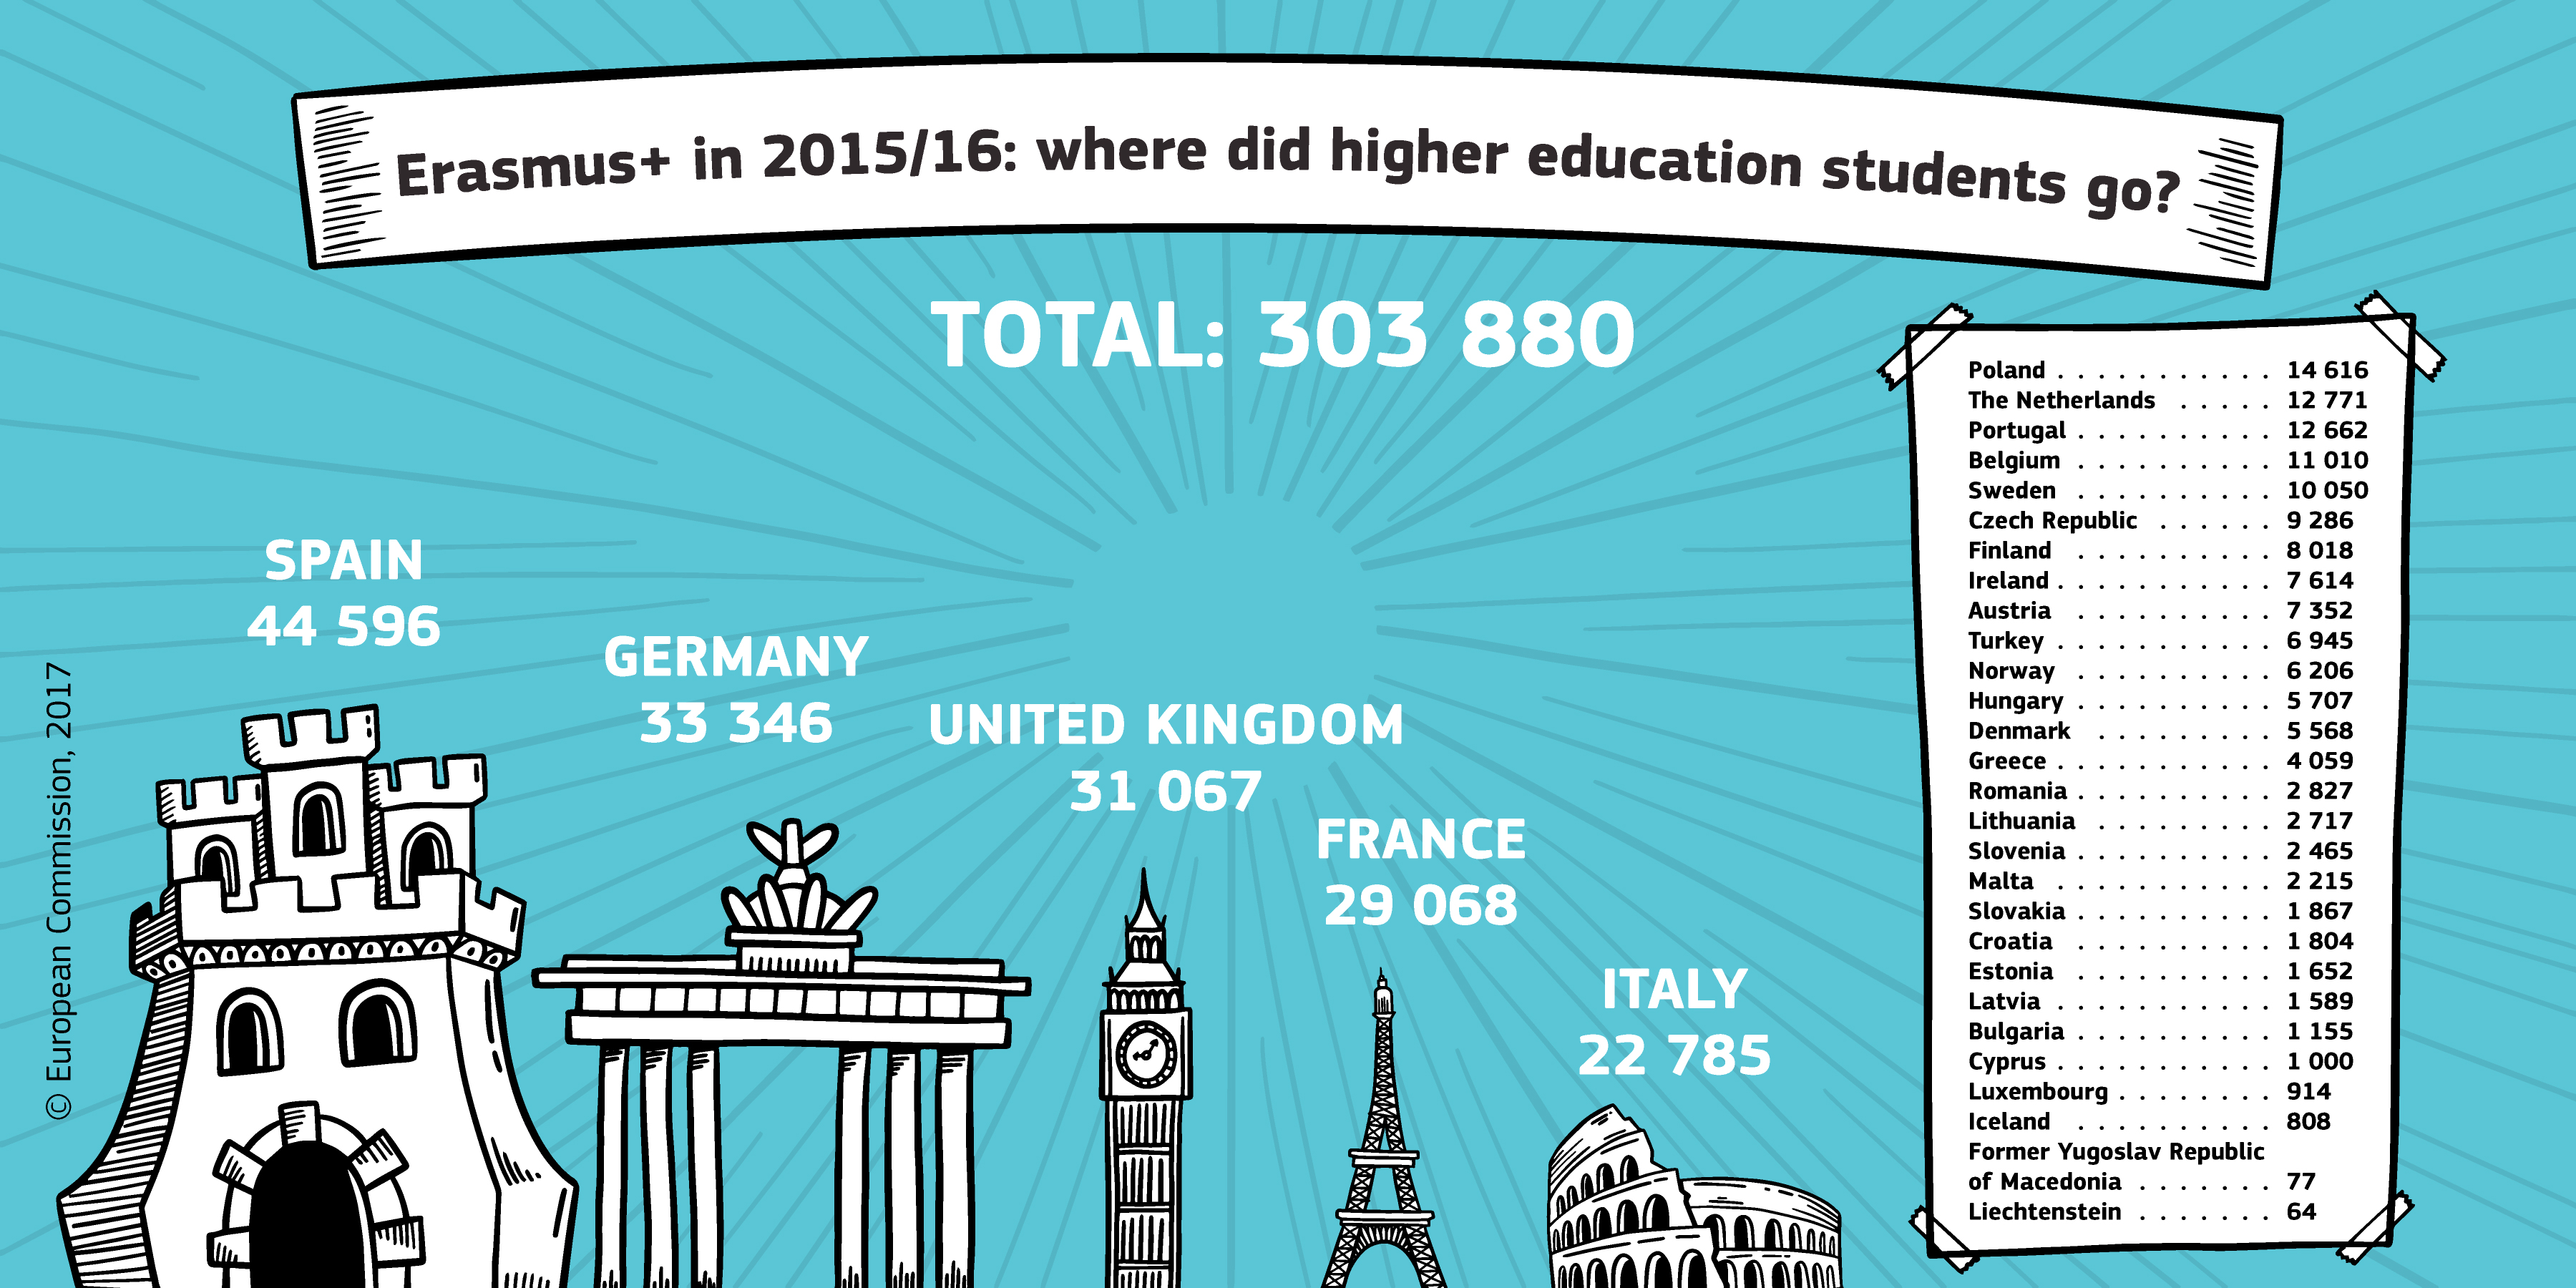 UGR most popular university among Erasmus+ participants